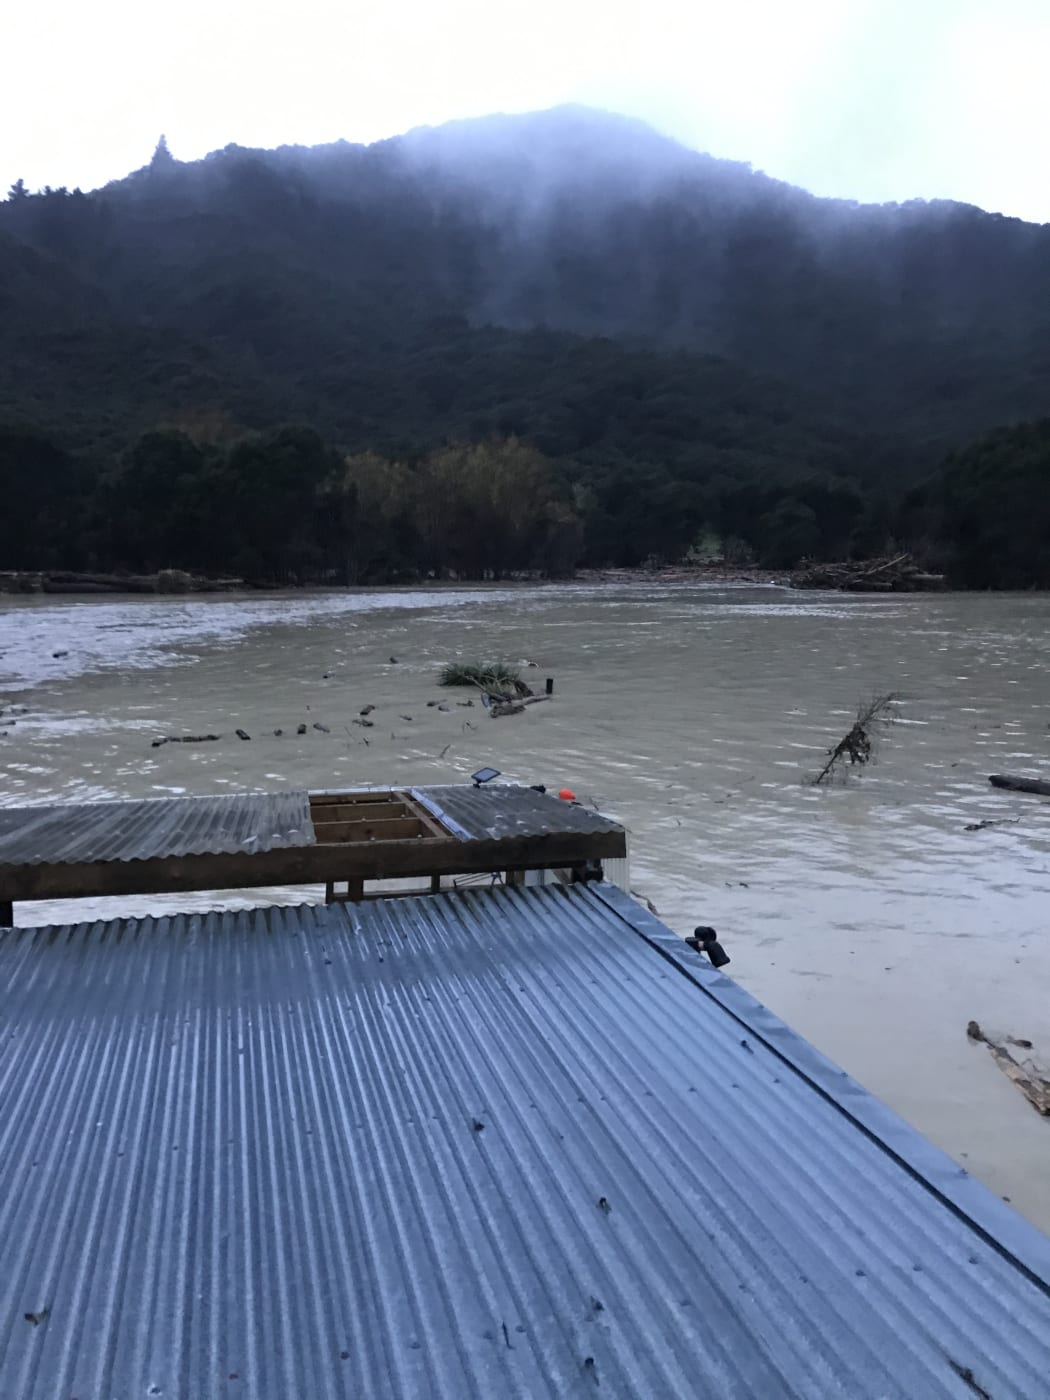 The Uawa river in flood at Tolaga Bay.